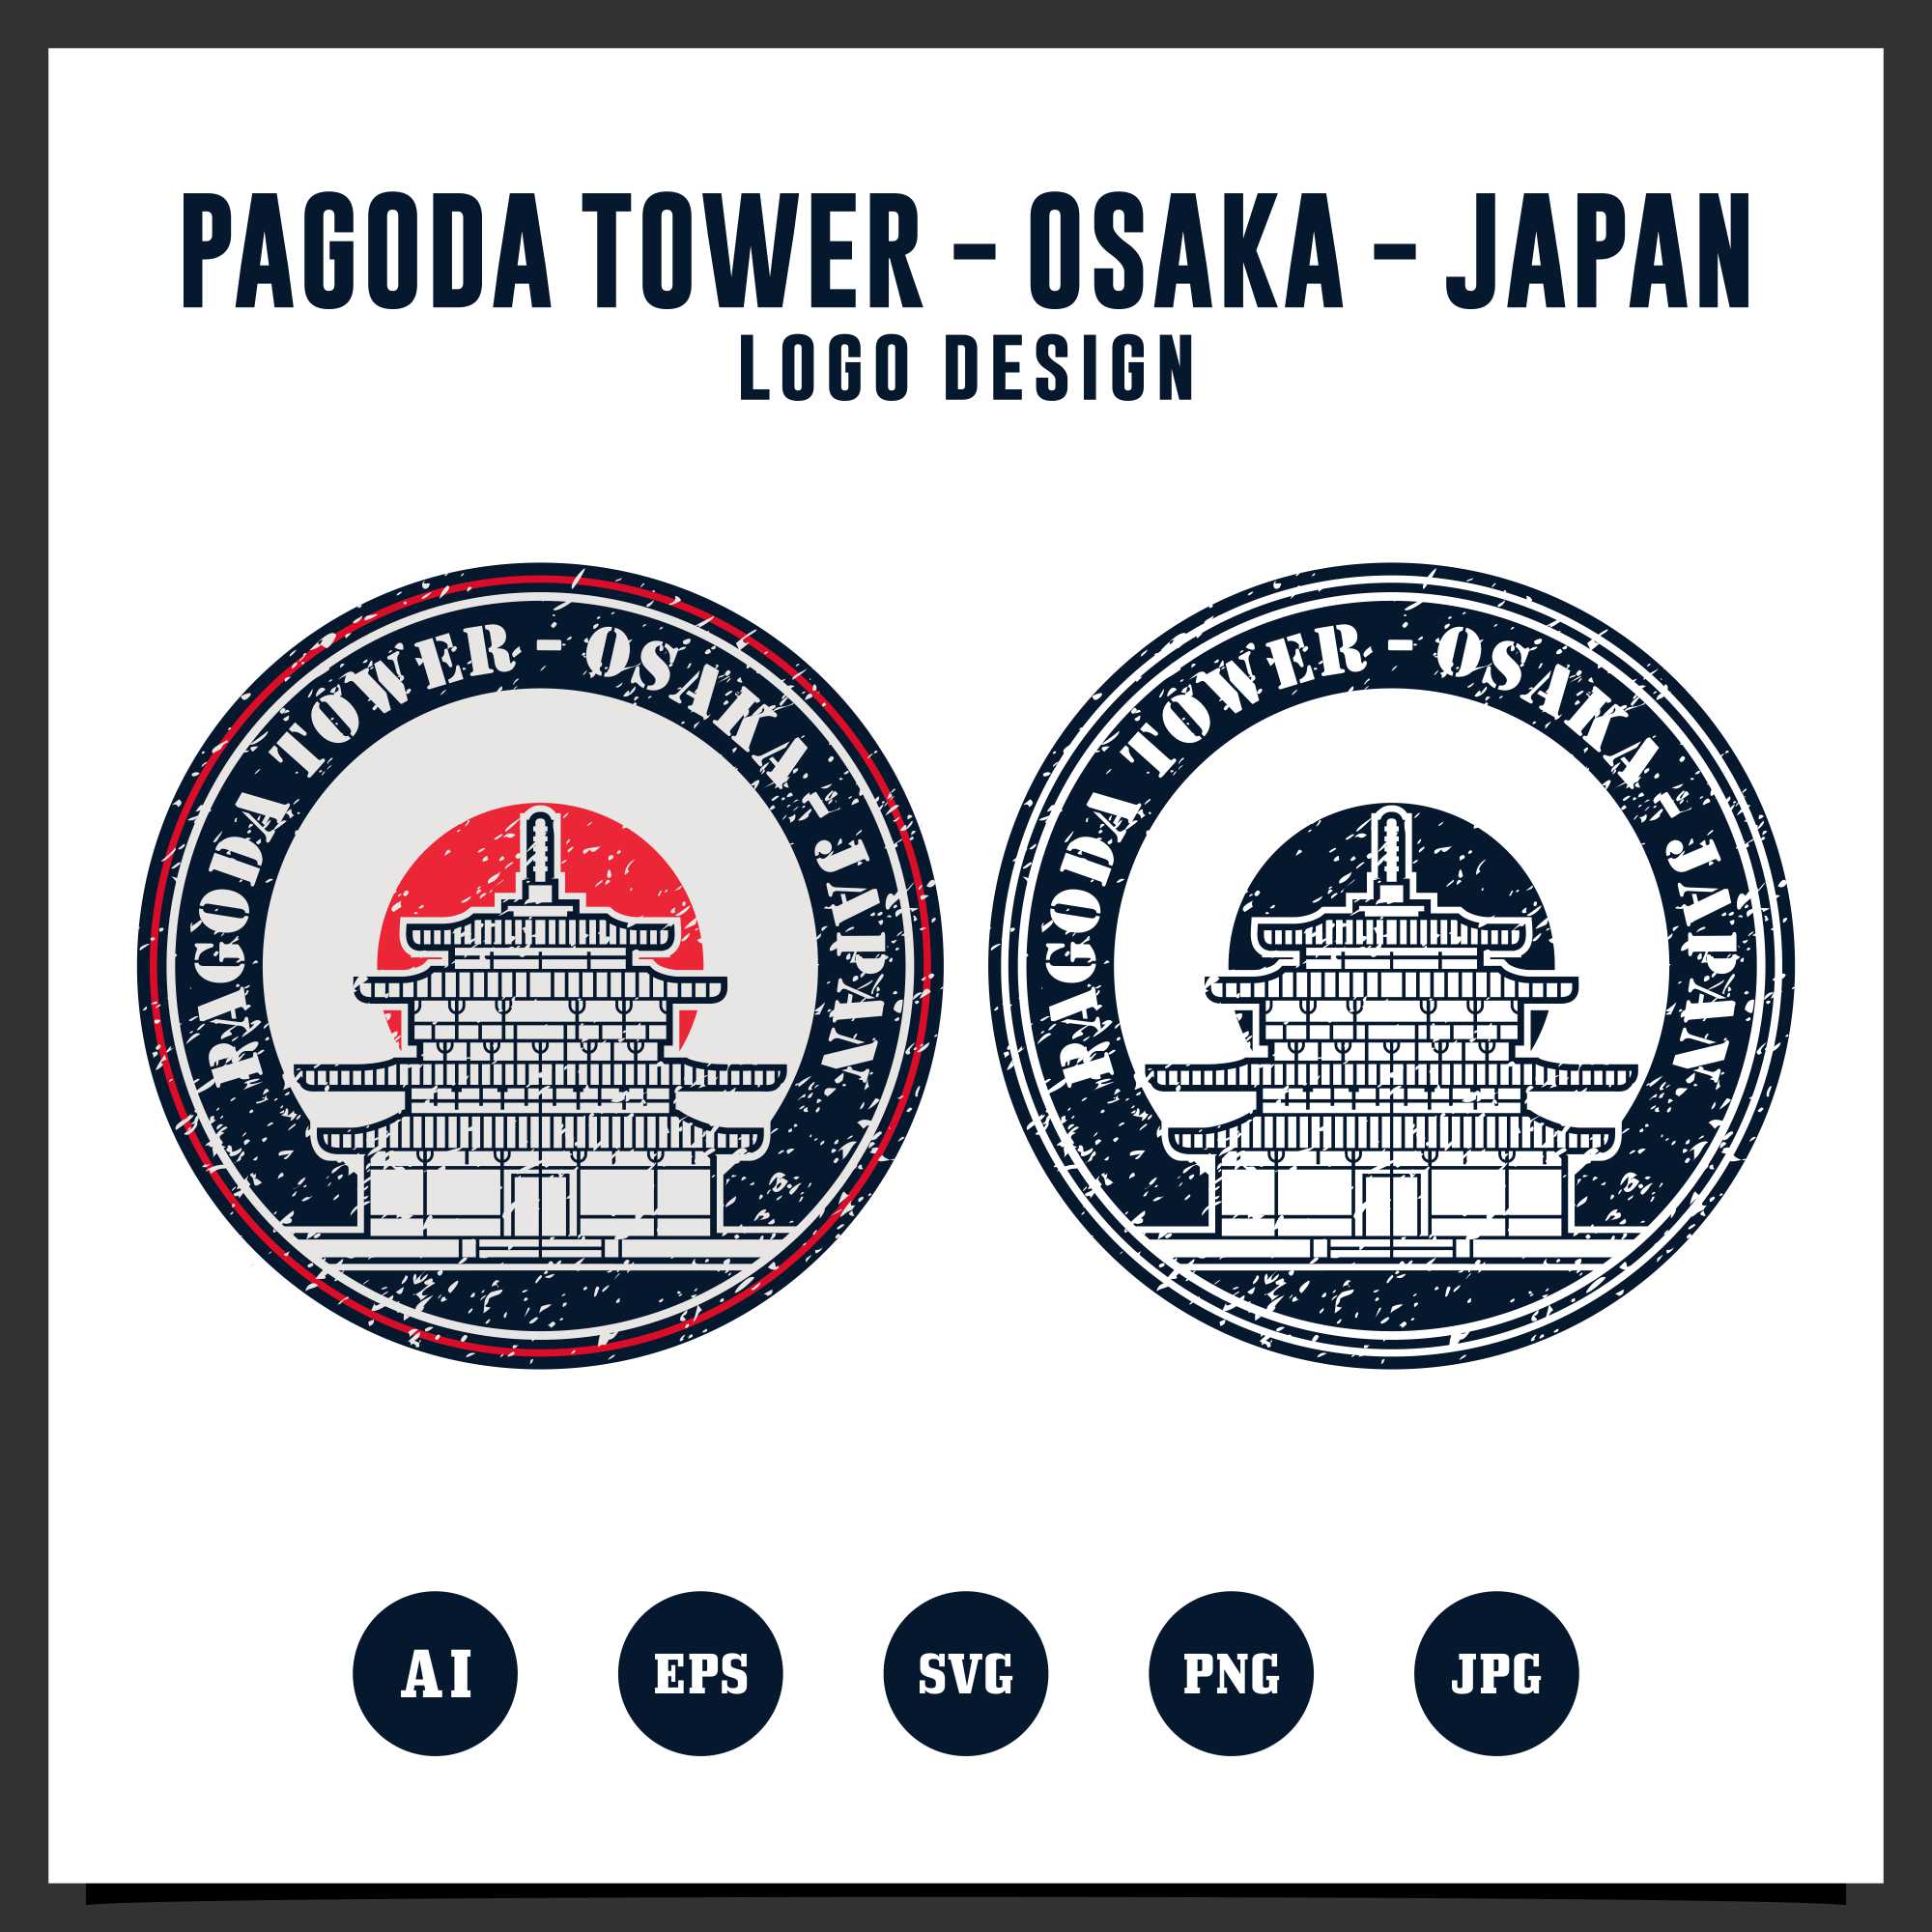 Pagoda Tower Osaka Japan logo design collection - $4 cover image.